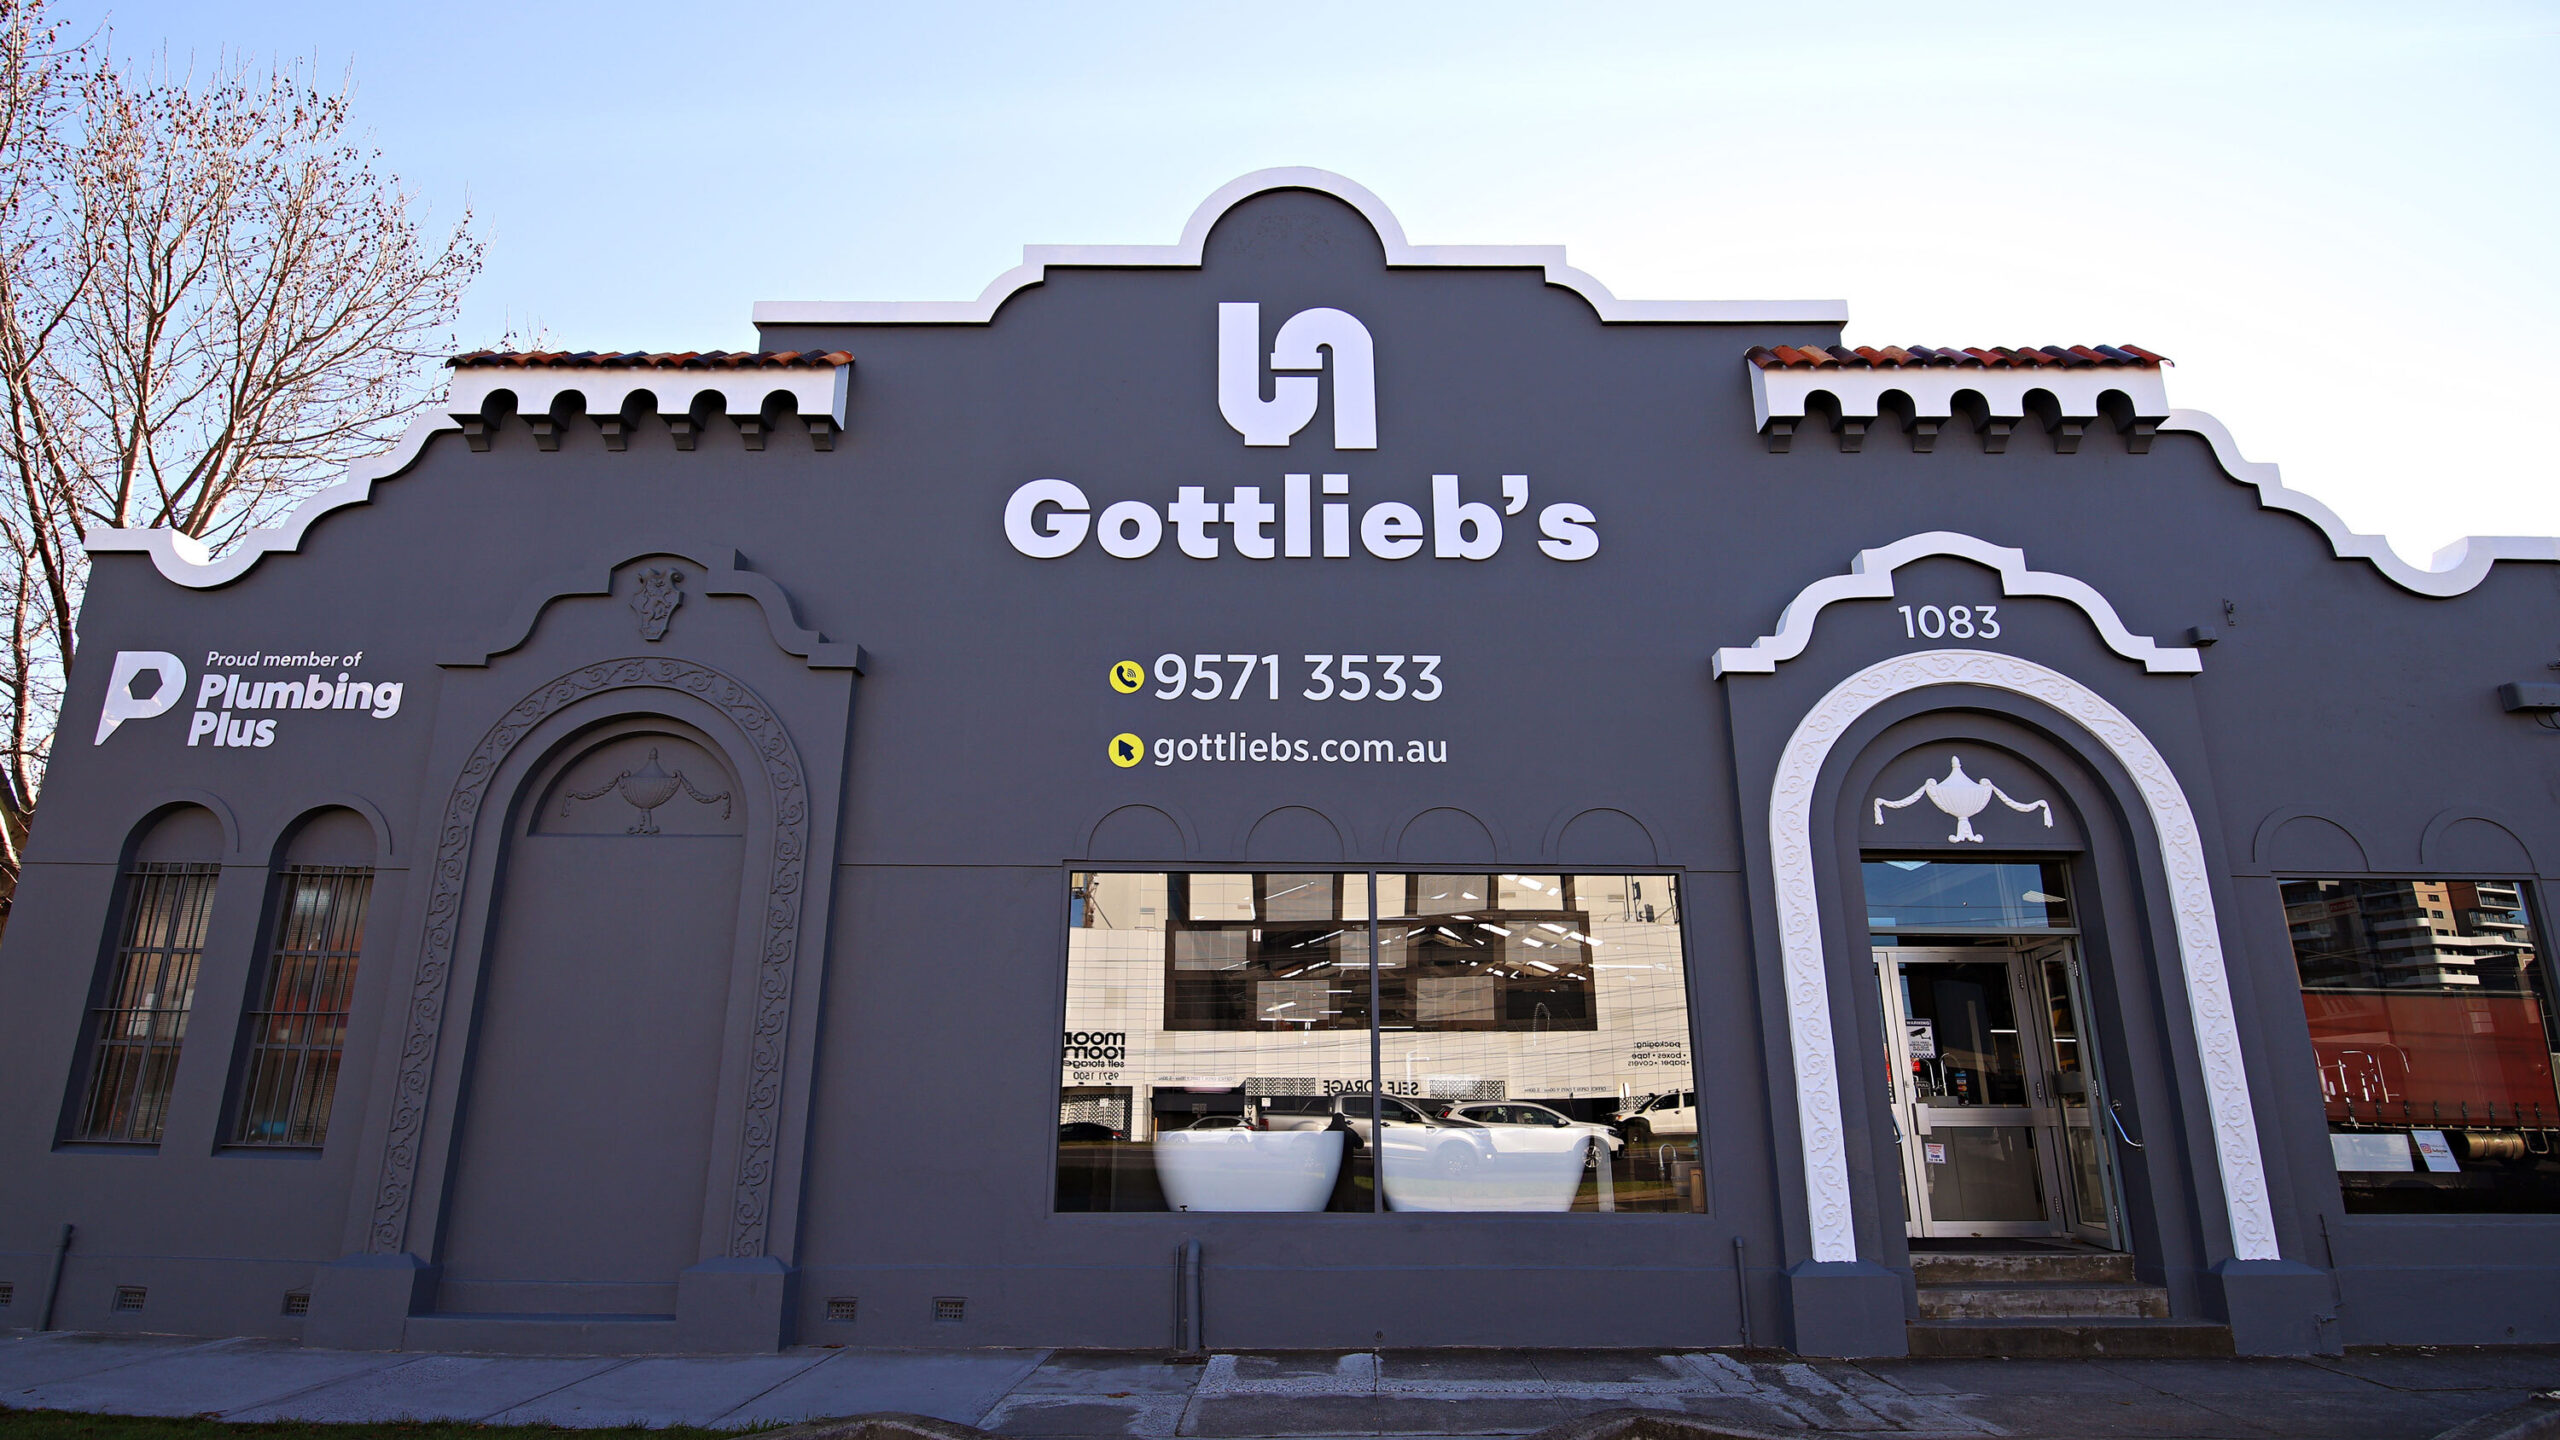 Gottlieb's store front